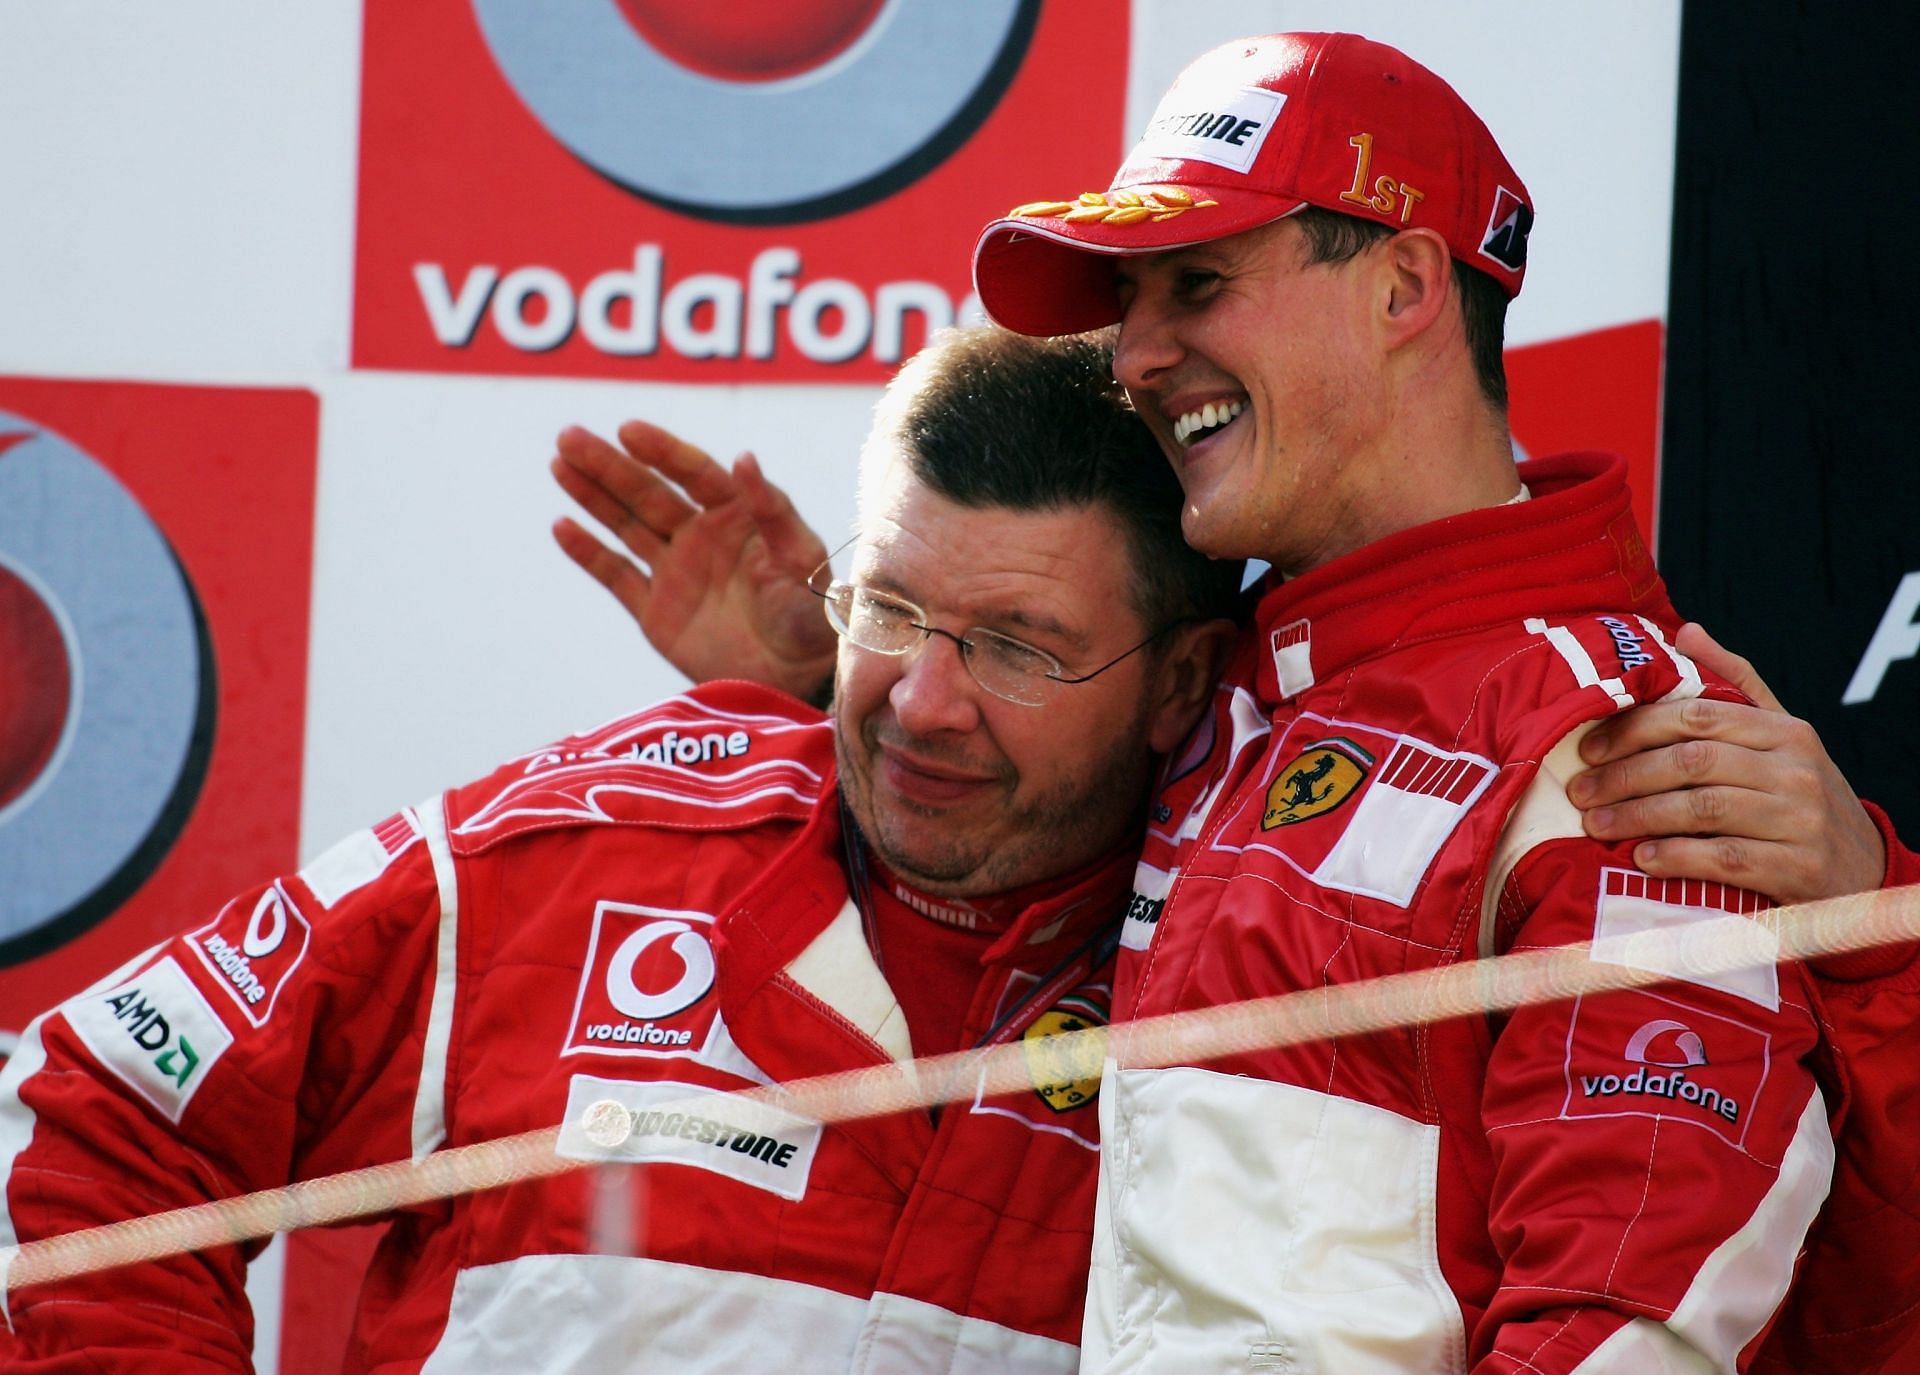 Michael Schumacher has been the most successful driver for Ferrari